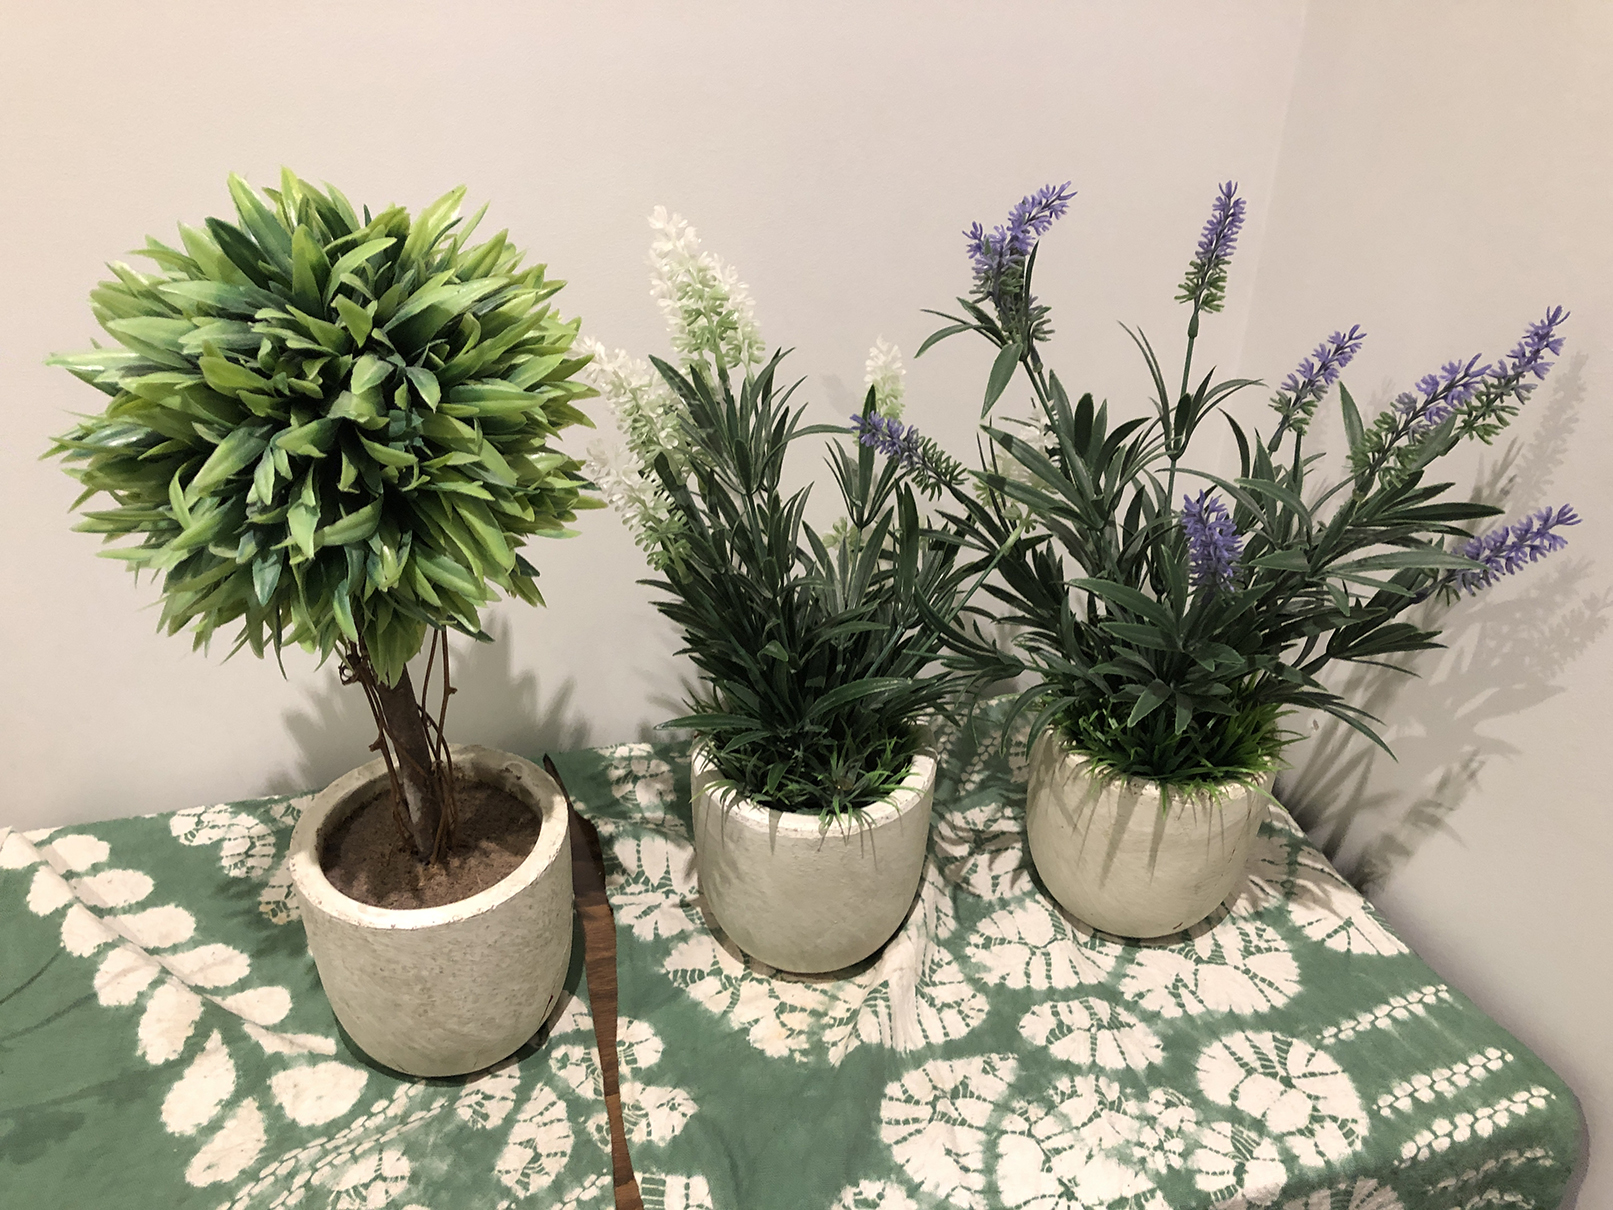 hikarisushi decor plants